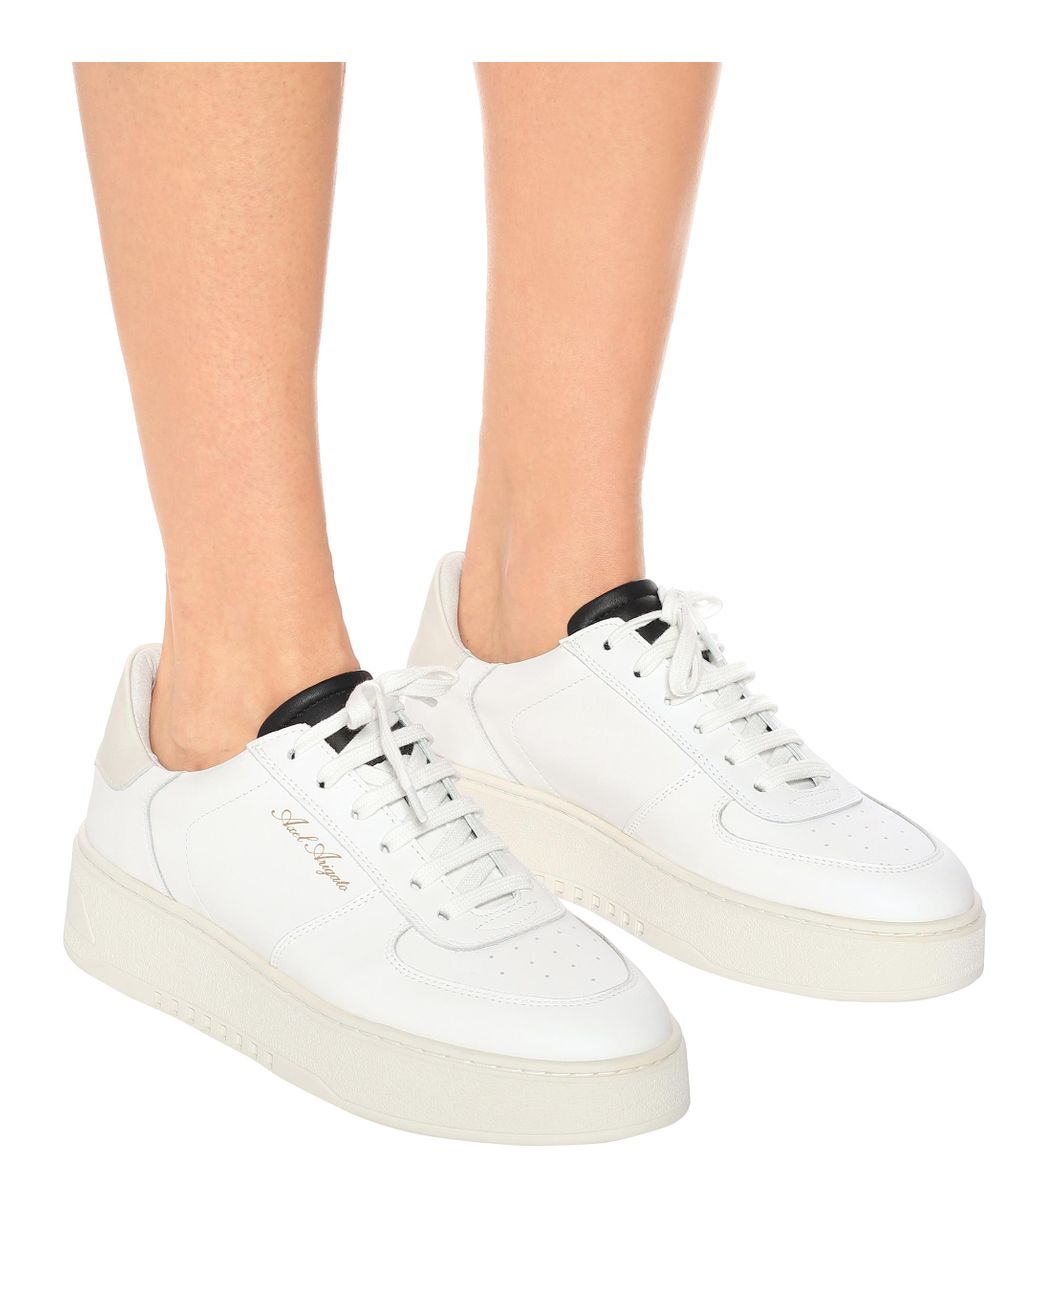 Axel Arigato Orbit Leather Sneakers in White | Lyst Australia